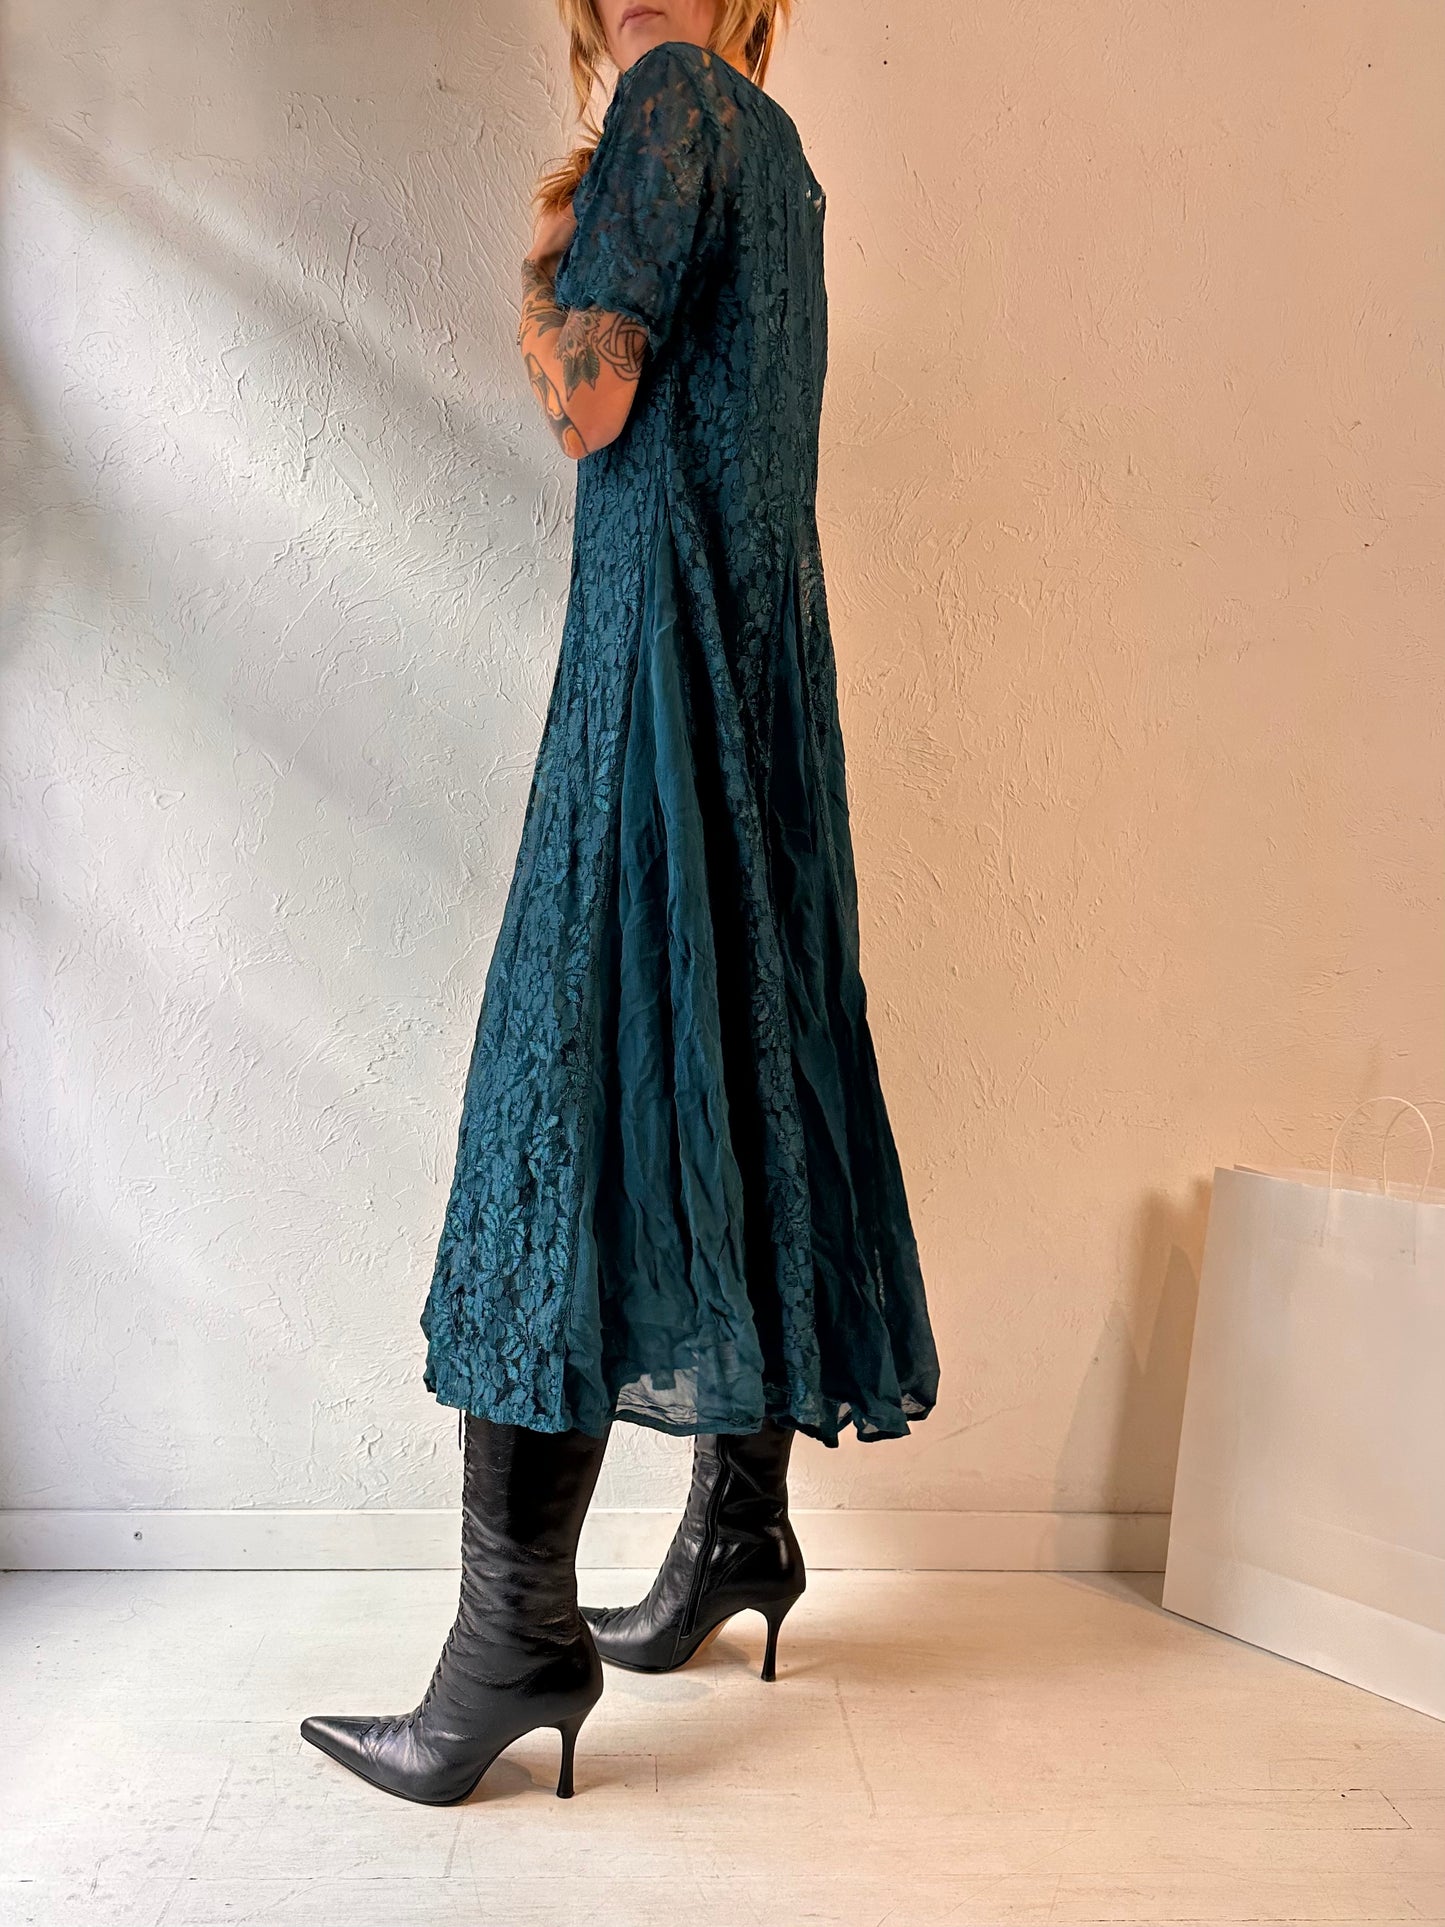 90s 'Emblem' Blue Green Rayon Lace Dress / Small